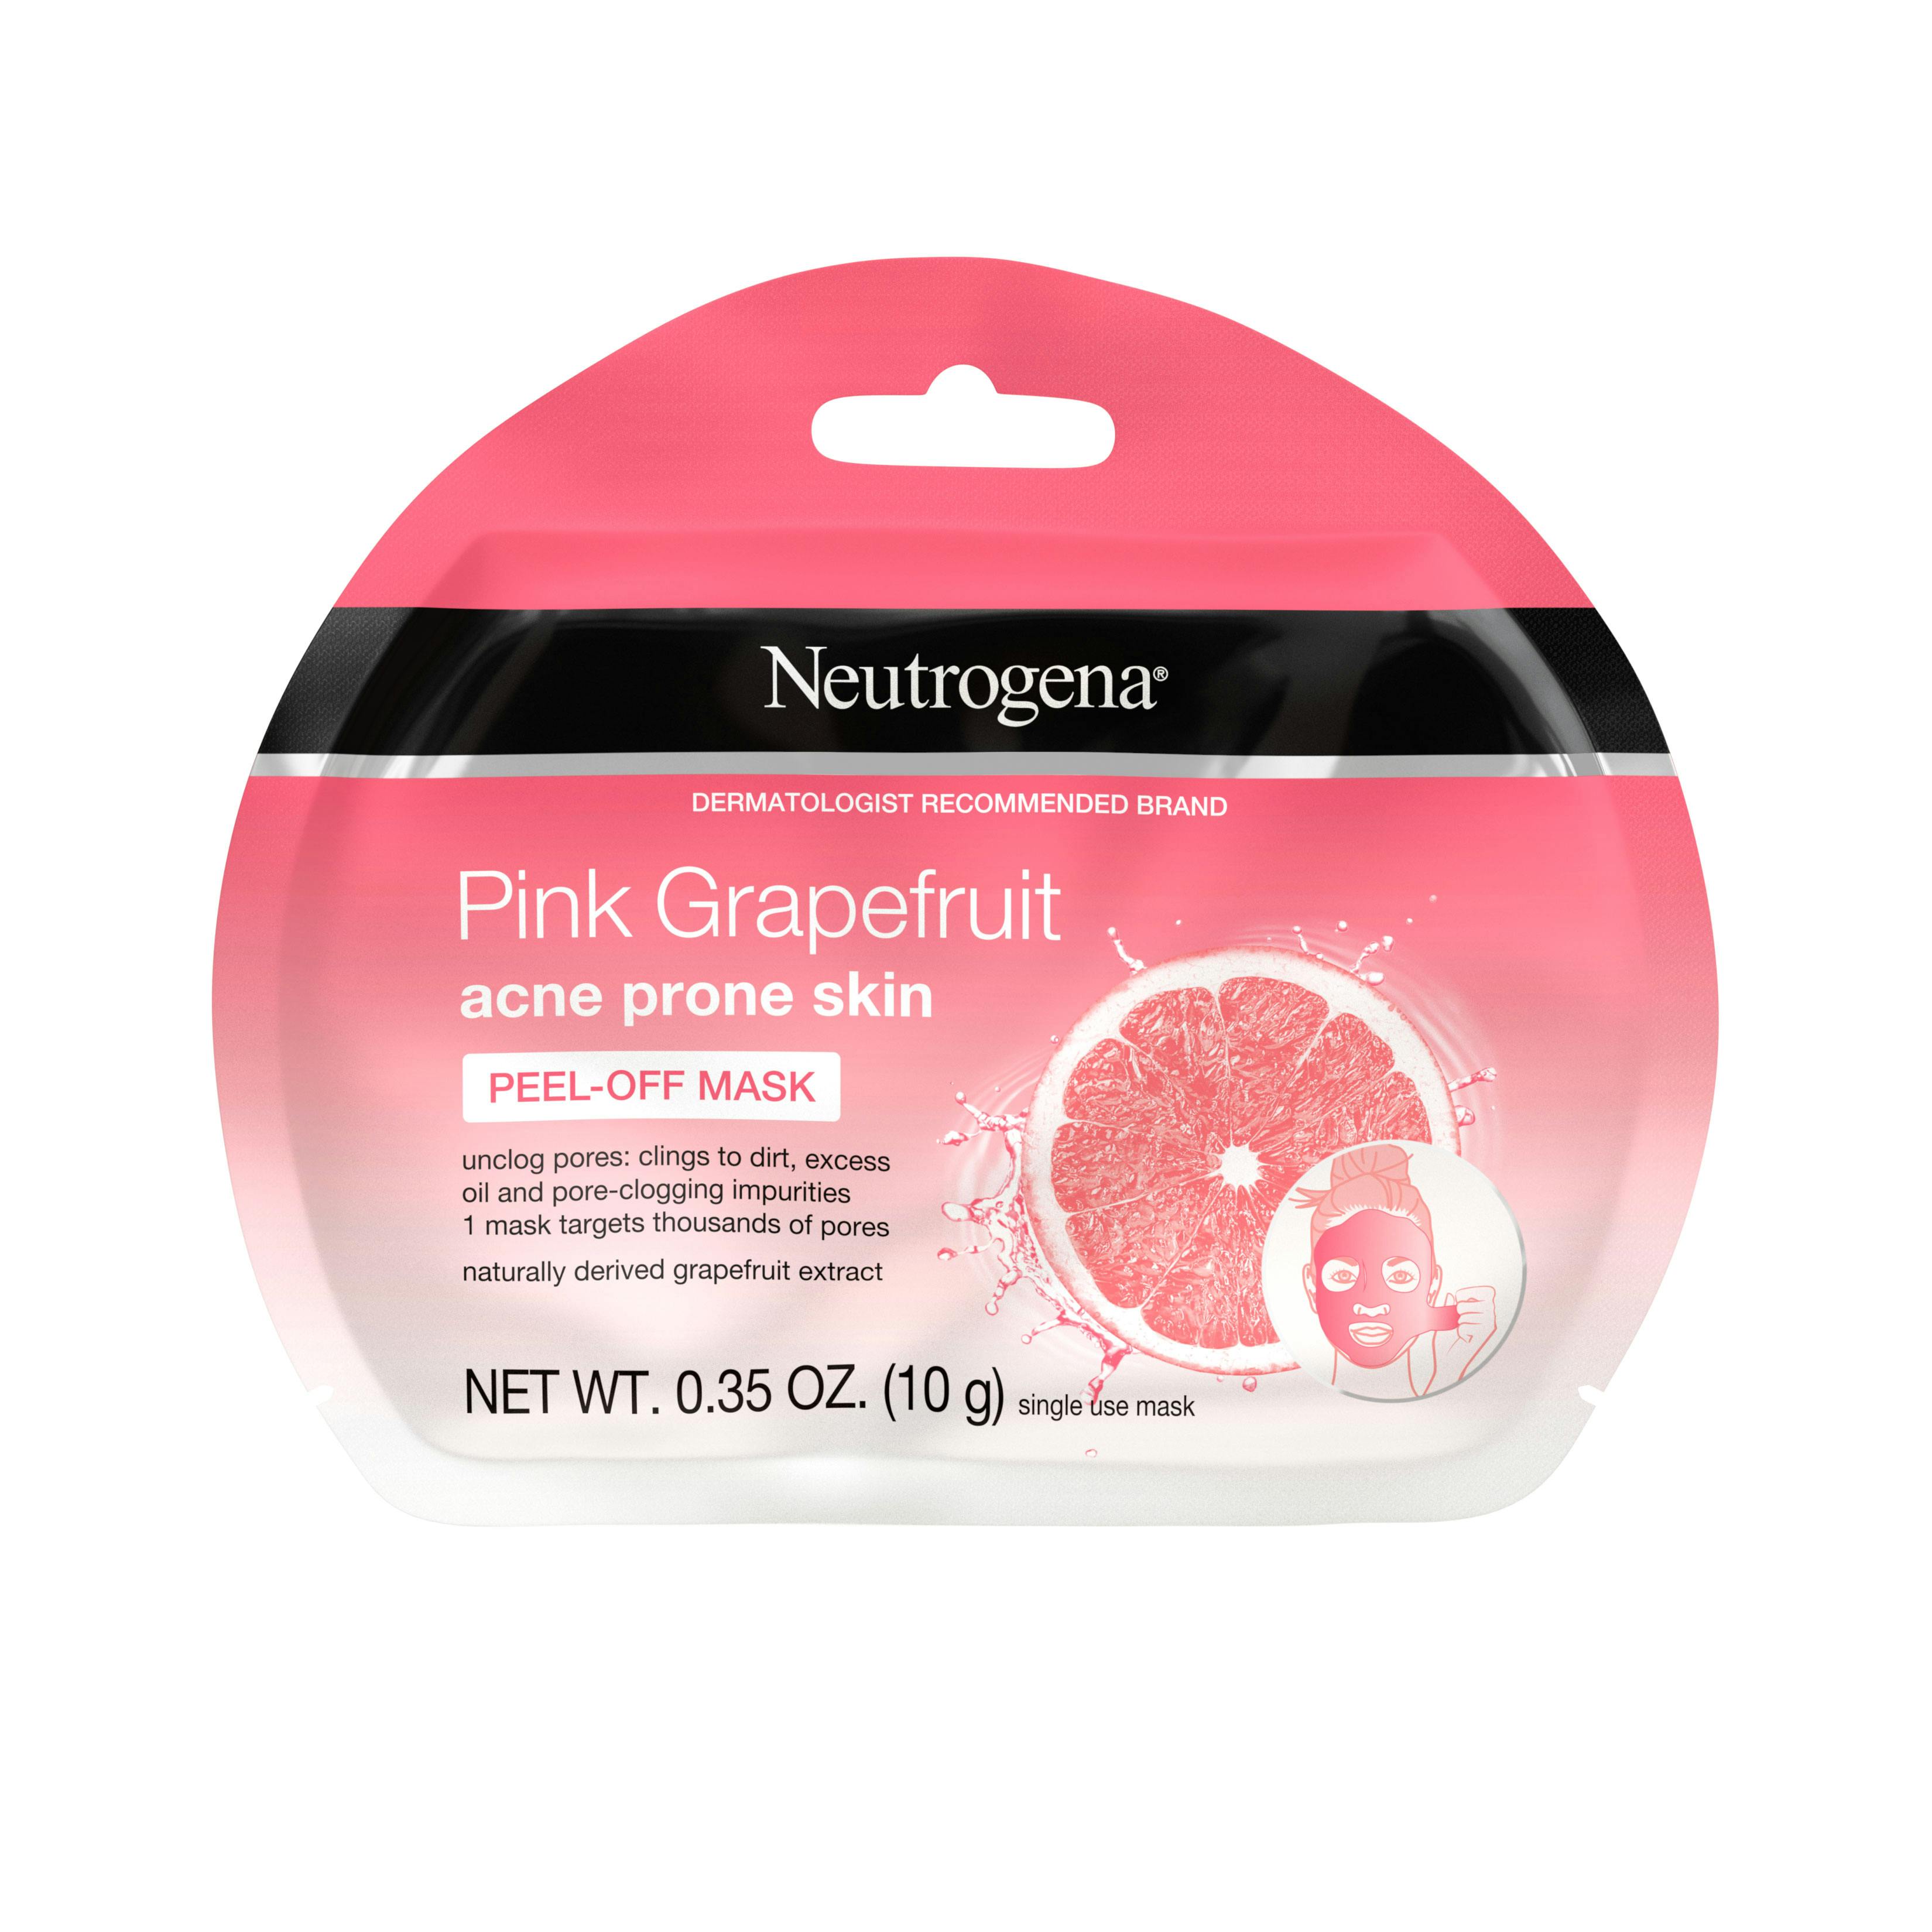 pink grapefruit neutrogena